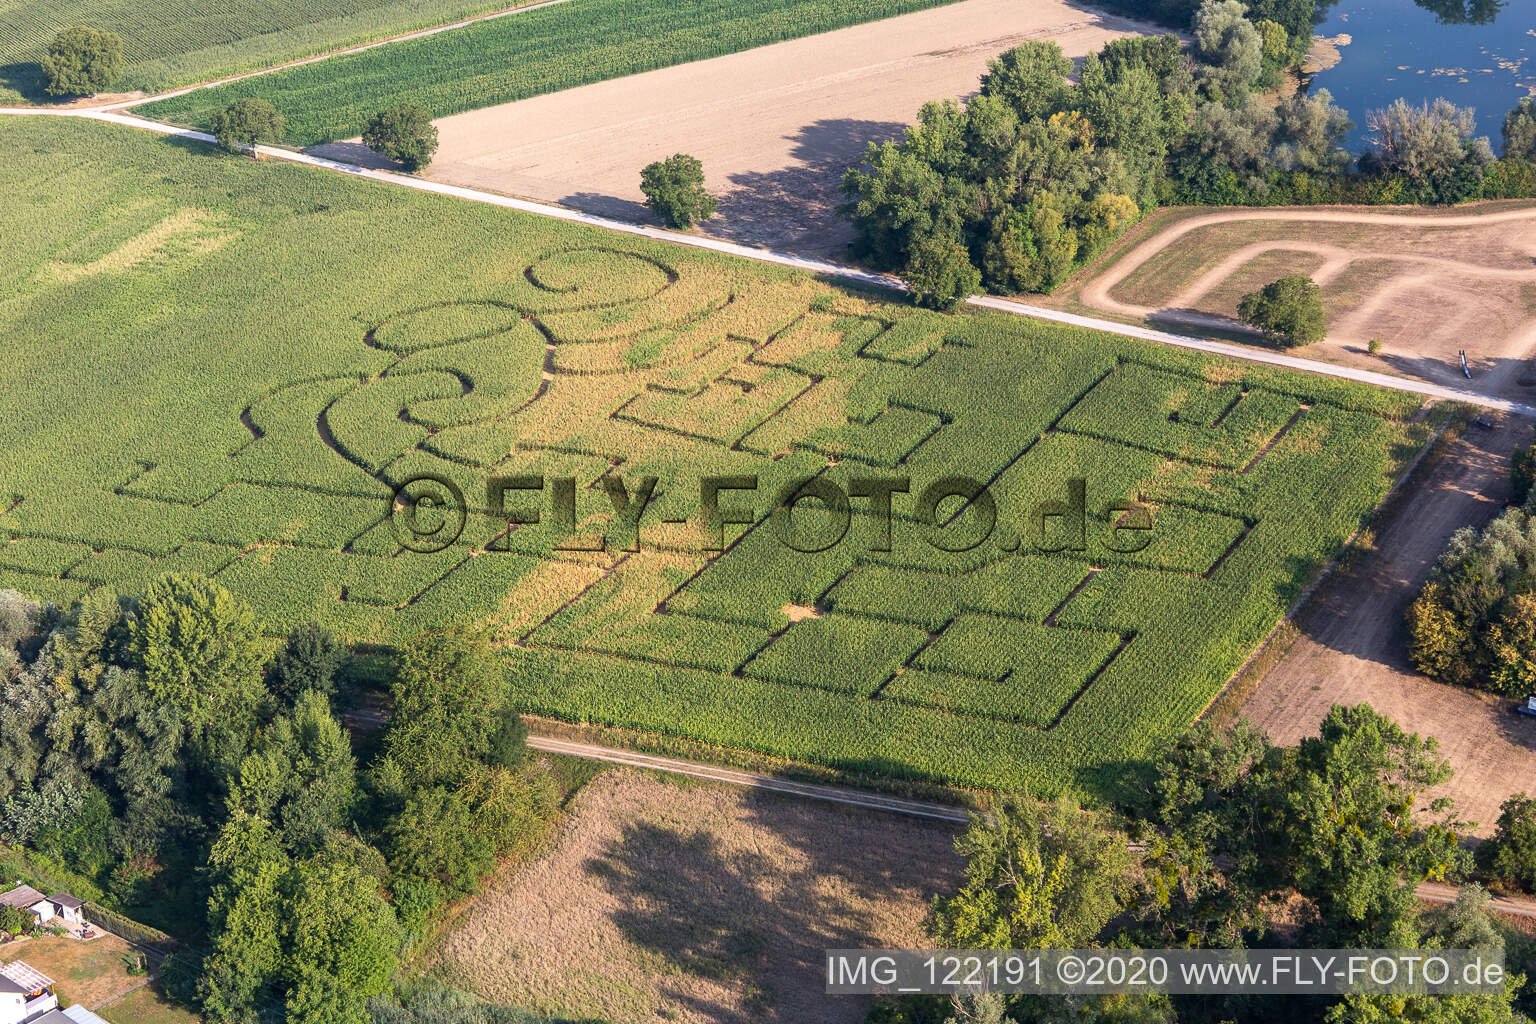 Corn maze in Leimersheim in the state Rhineland-Palatinate, Germany